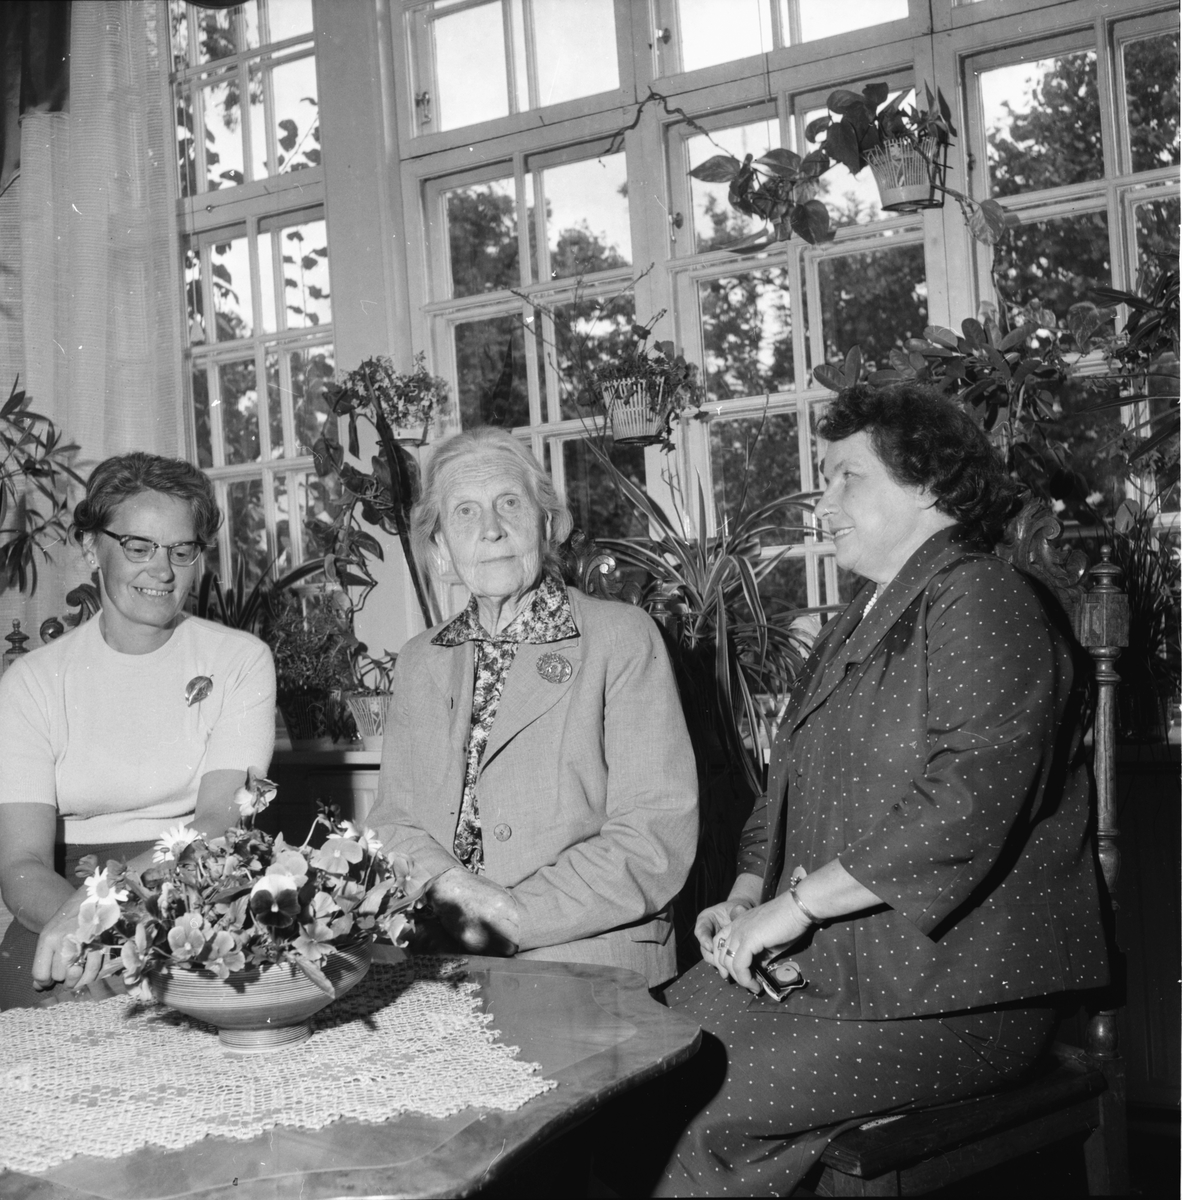 Wiklund, Gertrud, professorska
Uppsala, 8 sept 1960